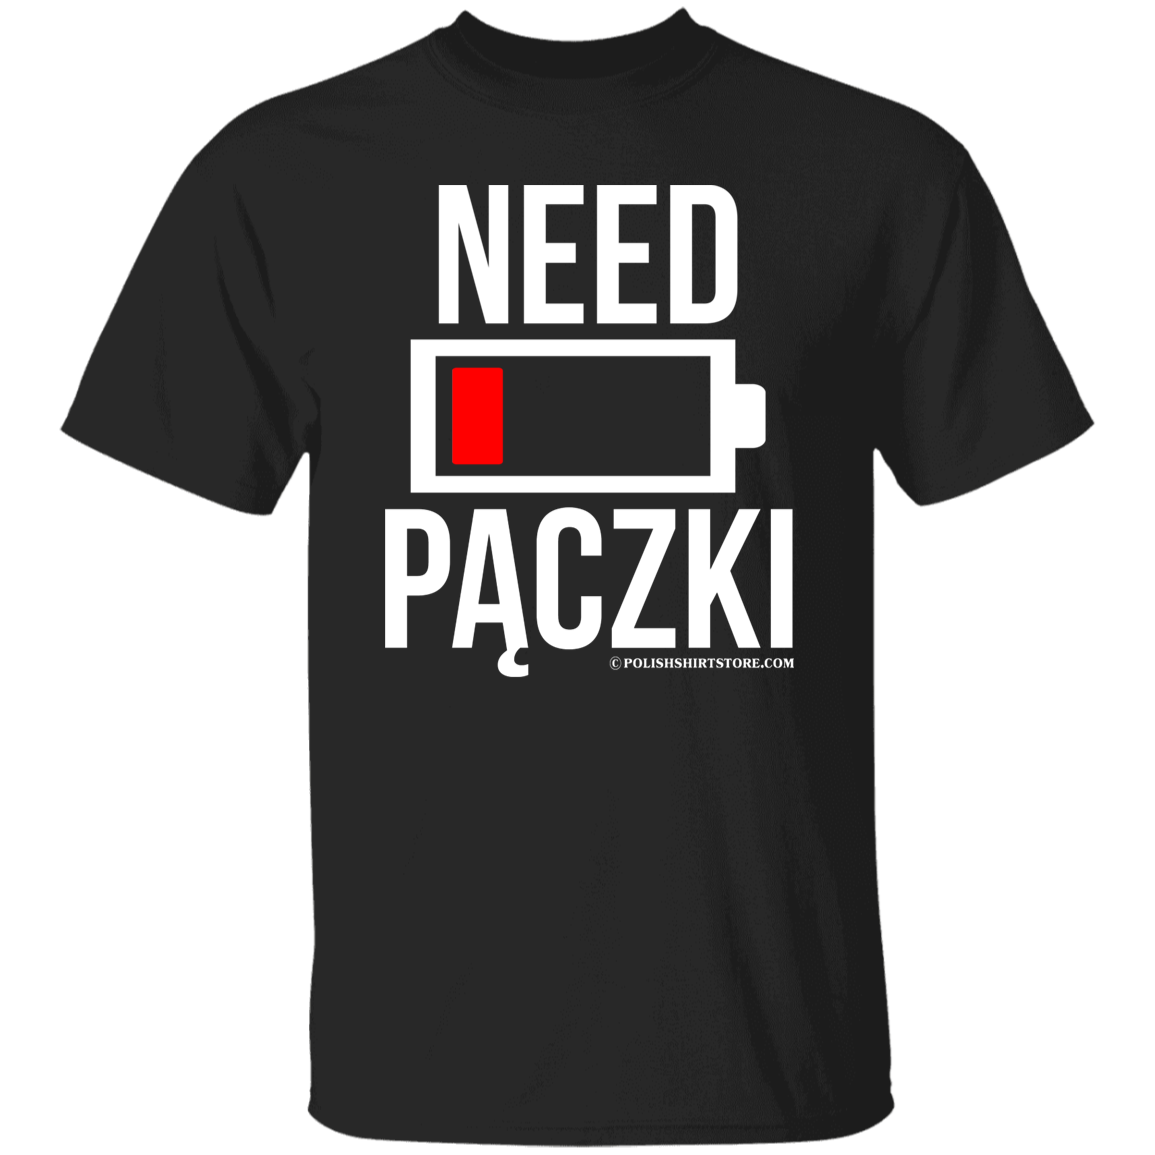 Need Paczki Battery Low Apparel CustomCat G500 5.3 oz. T-Shirt Black S